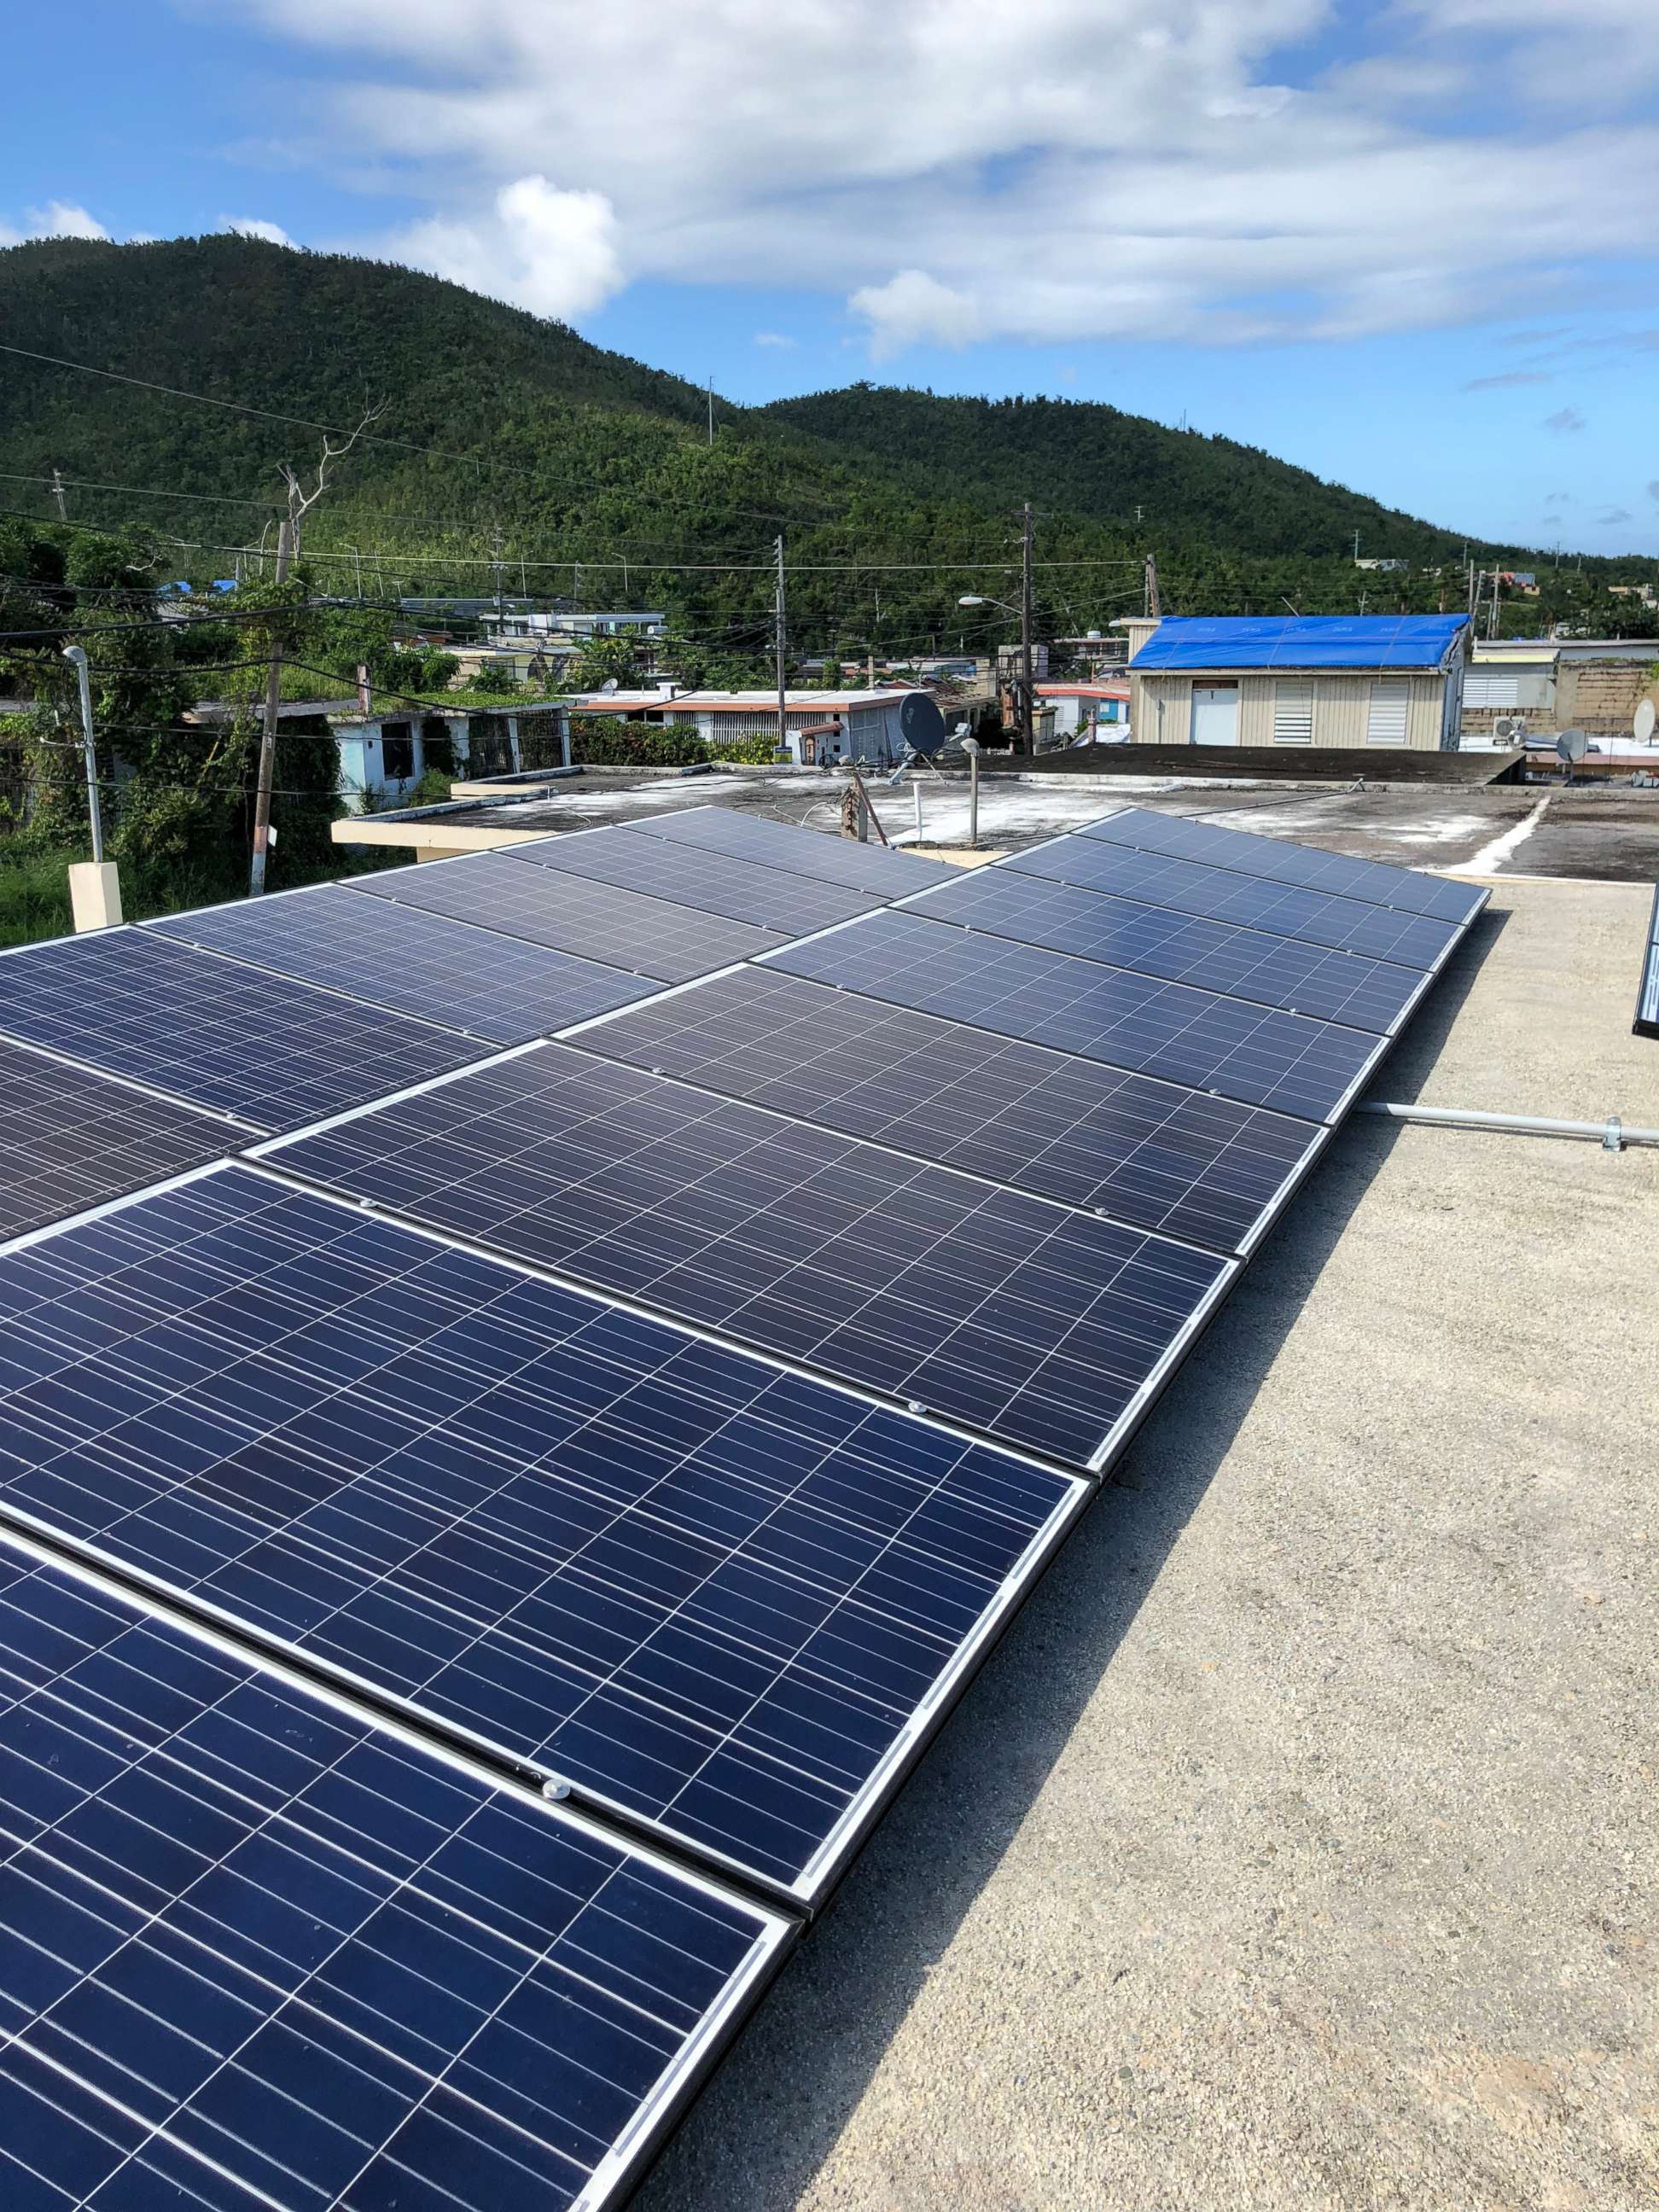 Solar panels atop a community organization building in Daguao, Puerto Rico.